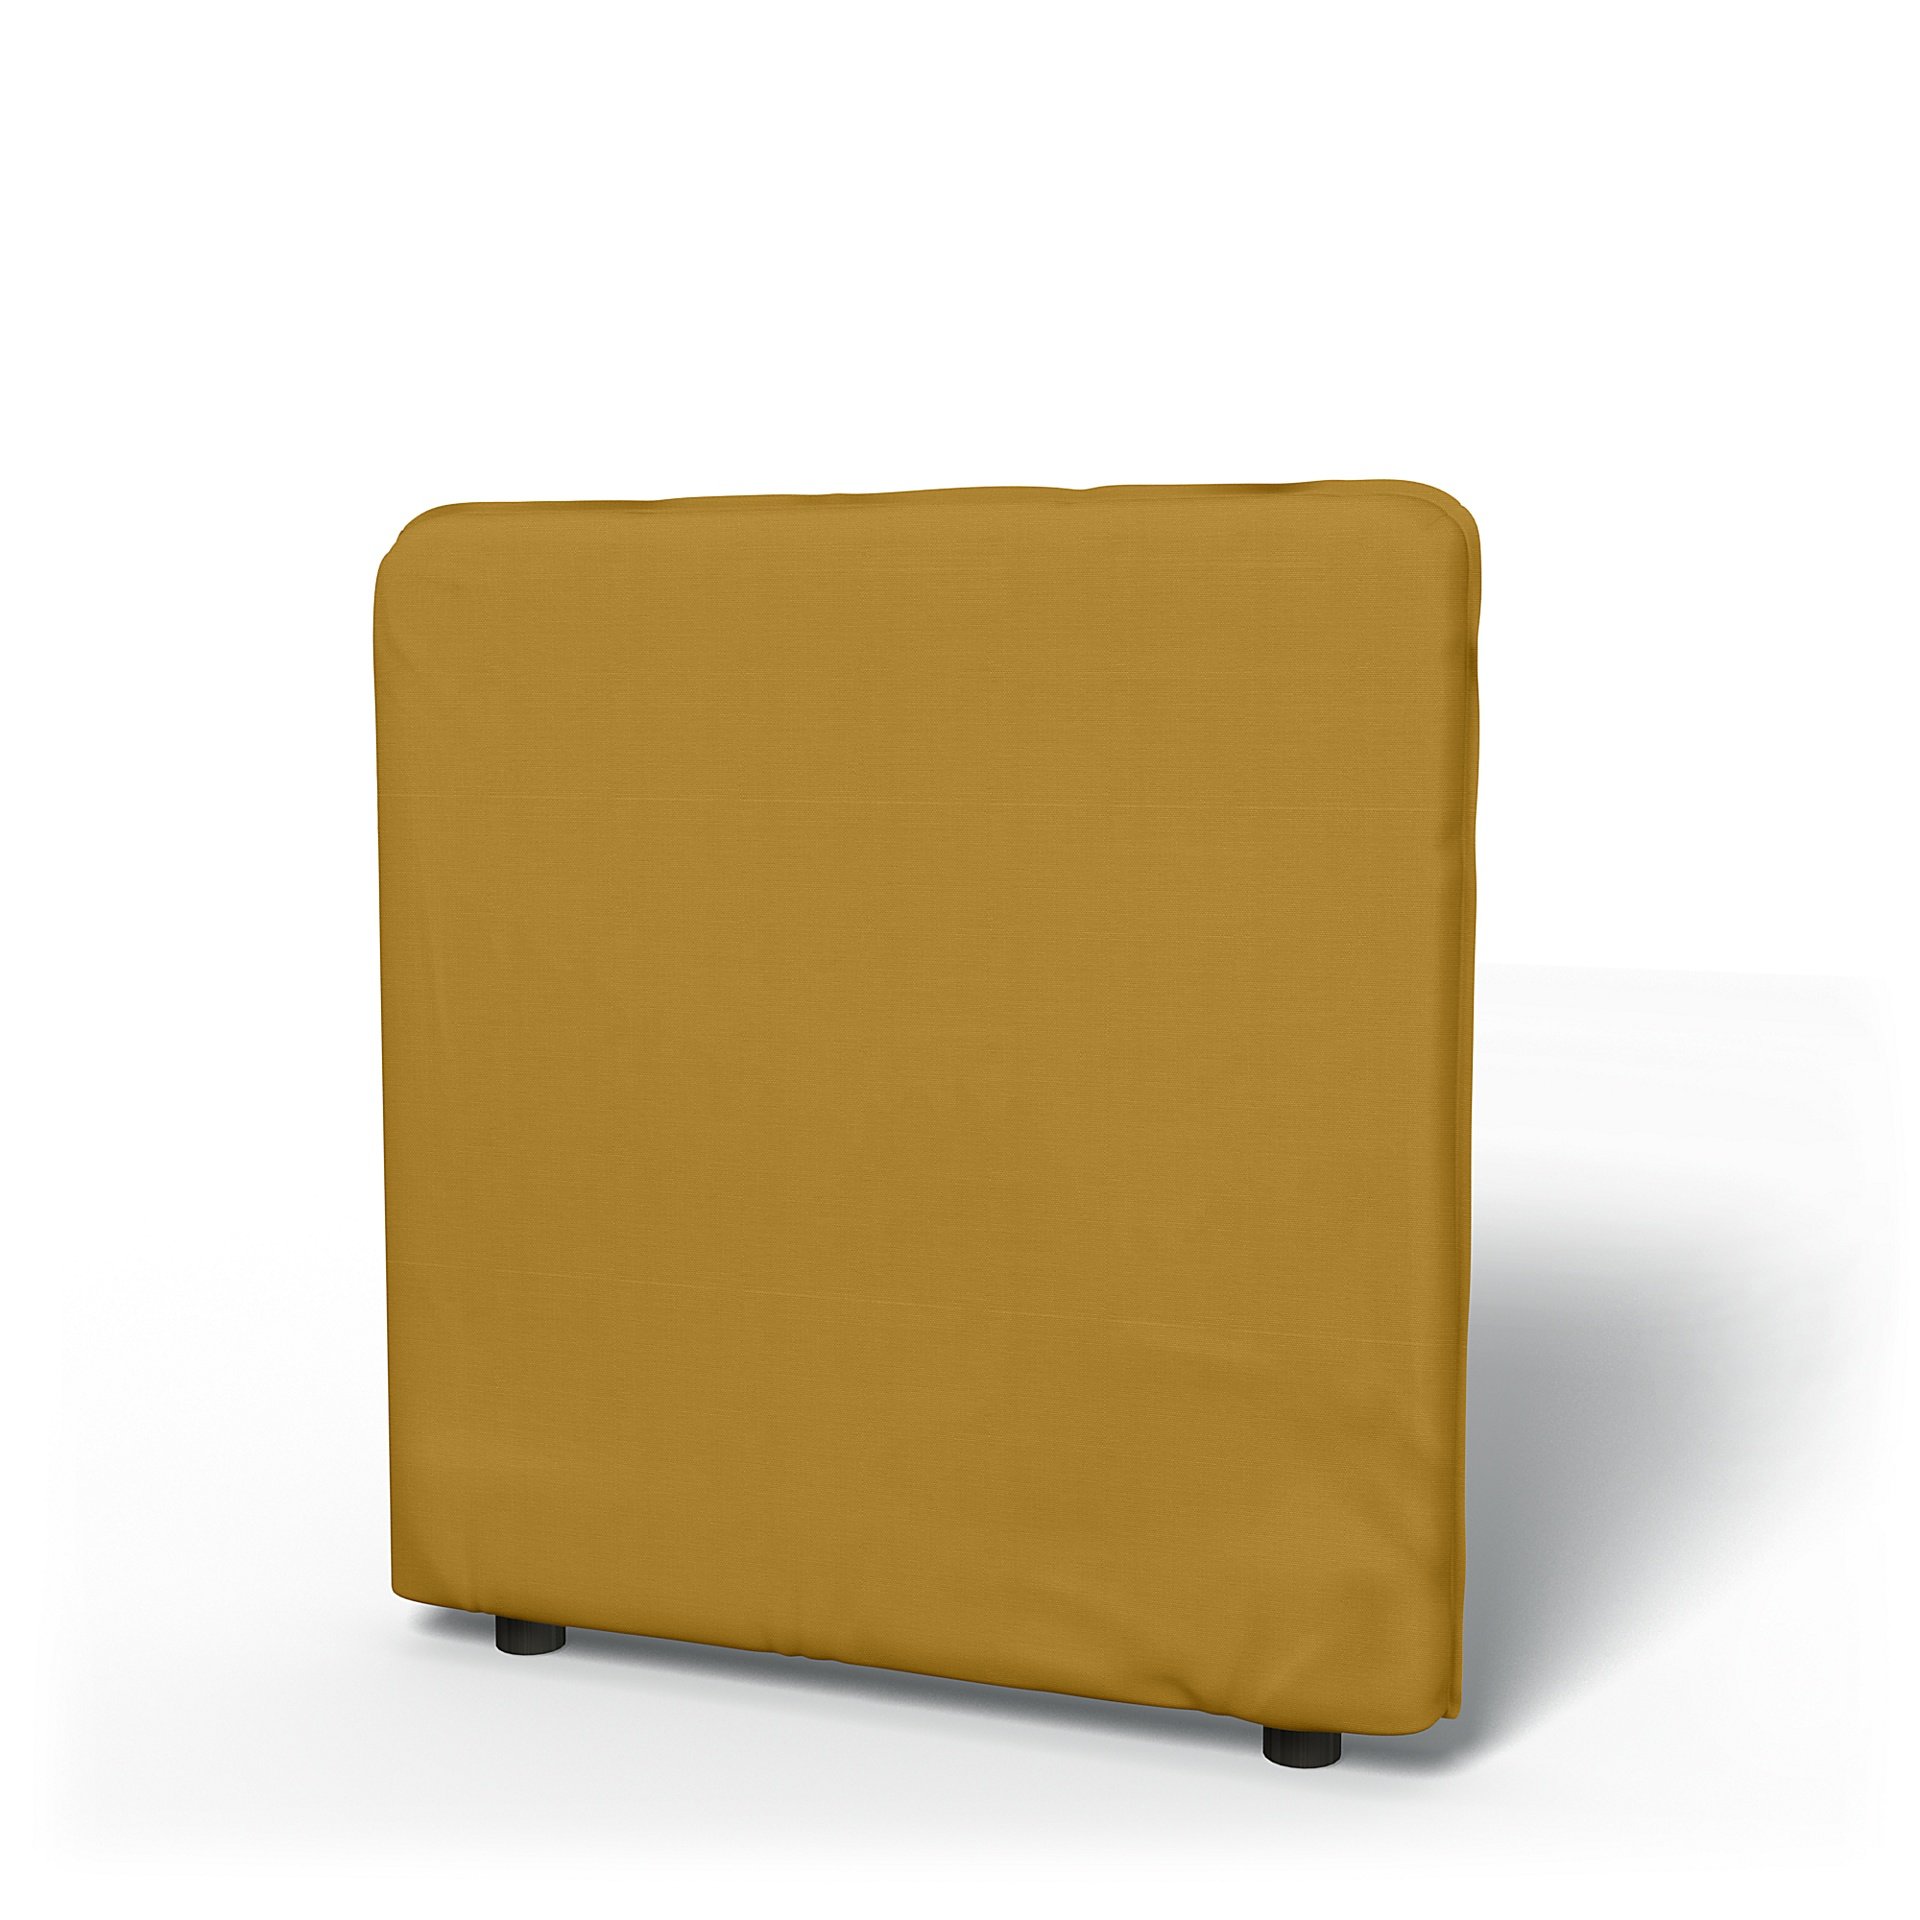 IKEA - Vallentuna Low Backrest Cover 80x80cm 32x32in, Honey Mustard, Cotton - Bemz